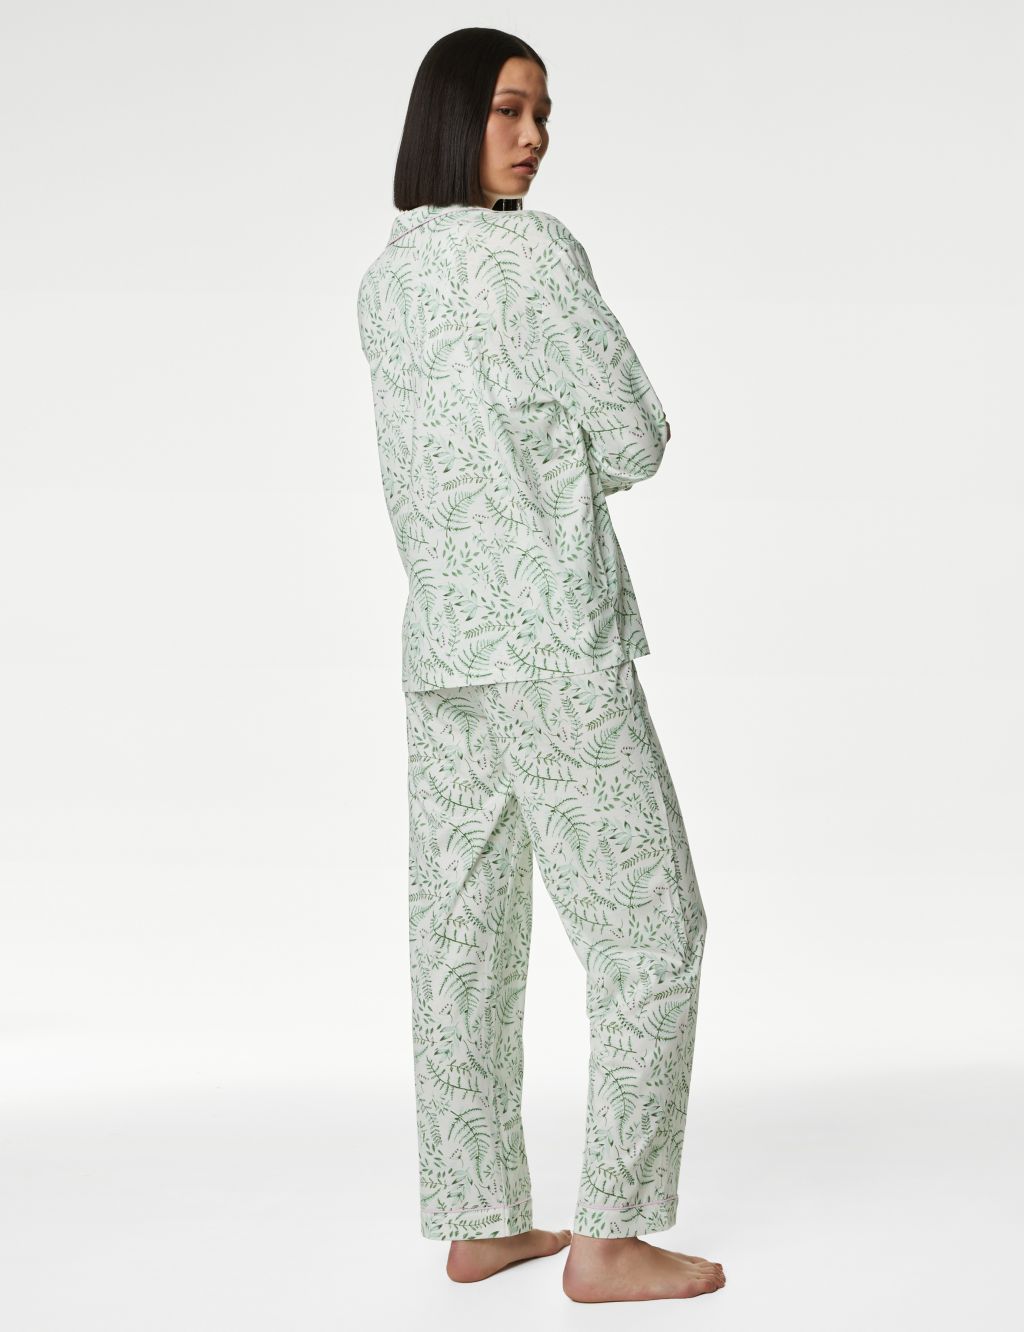 Cool Comfort™ Cotton Modal Printed Pyjama Set image 6